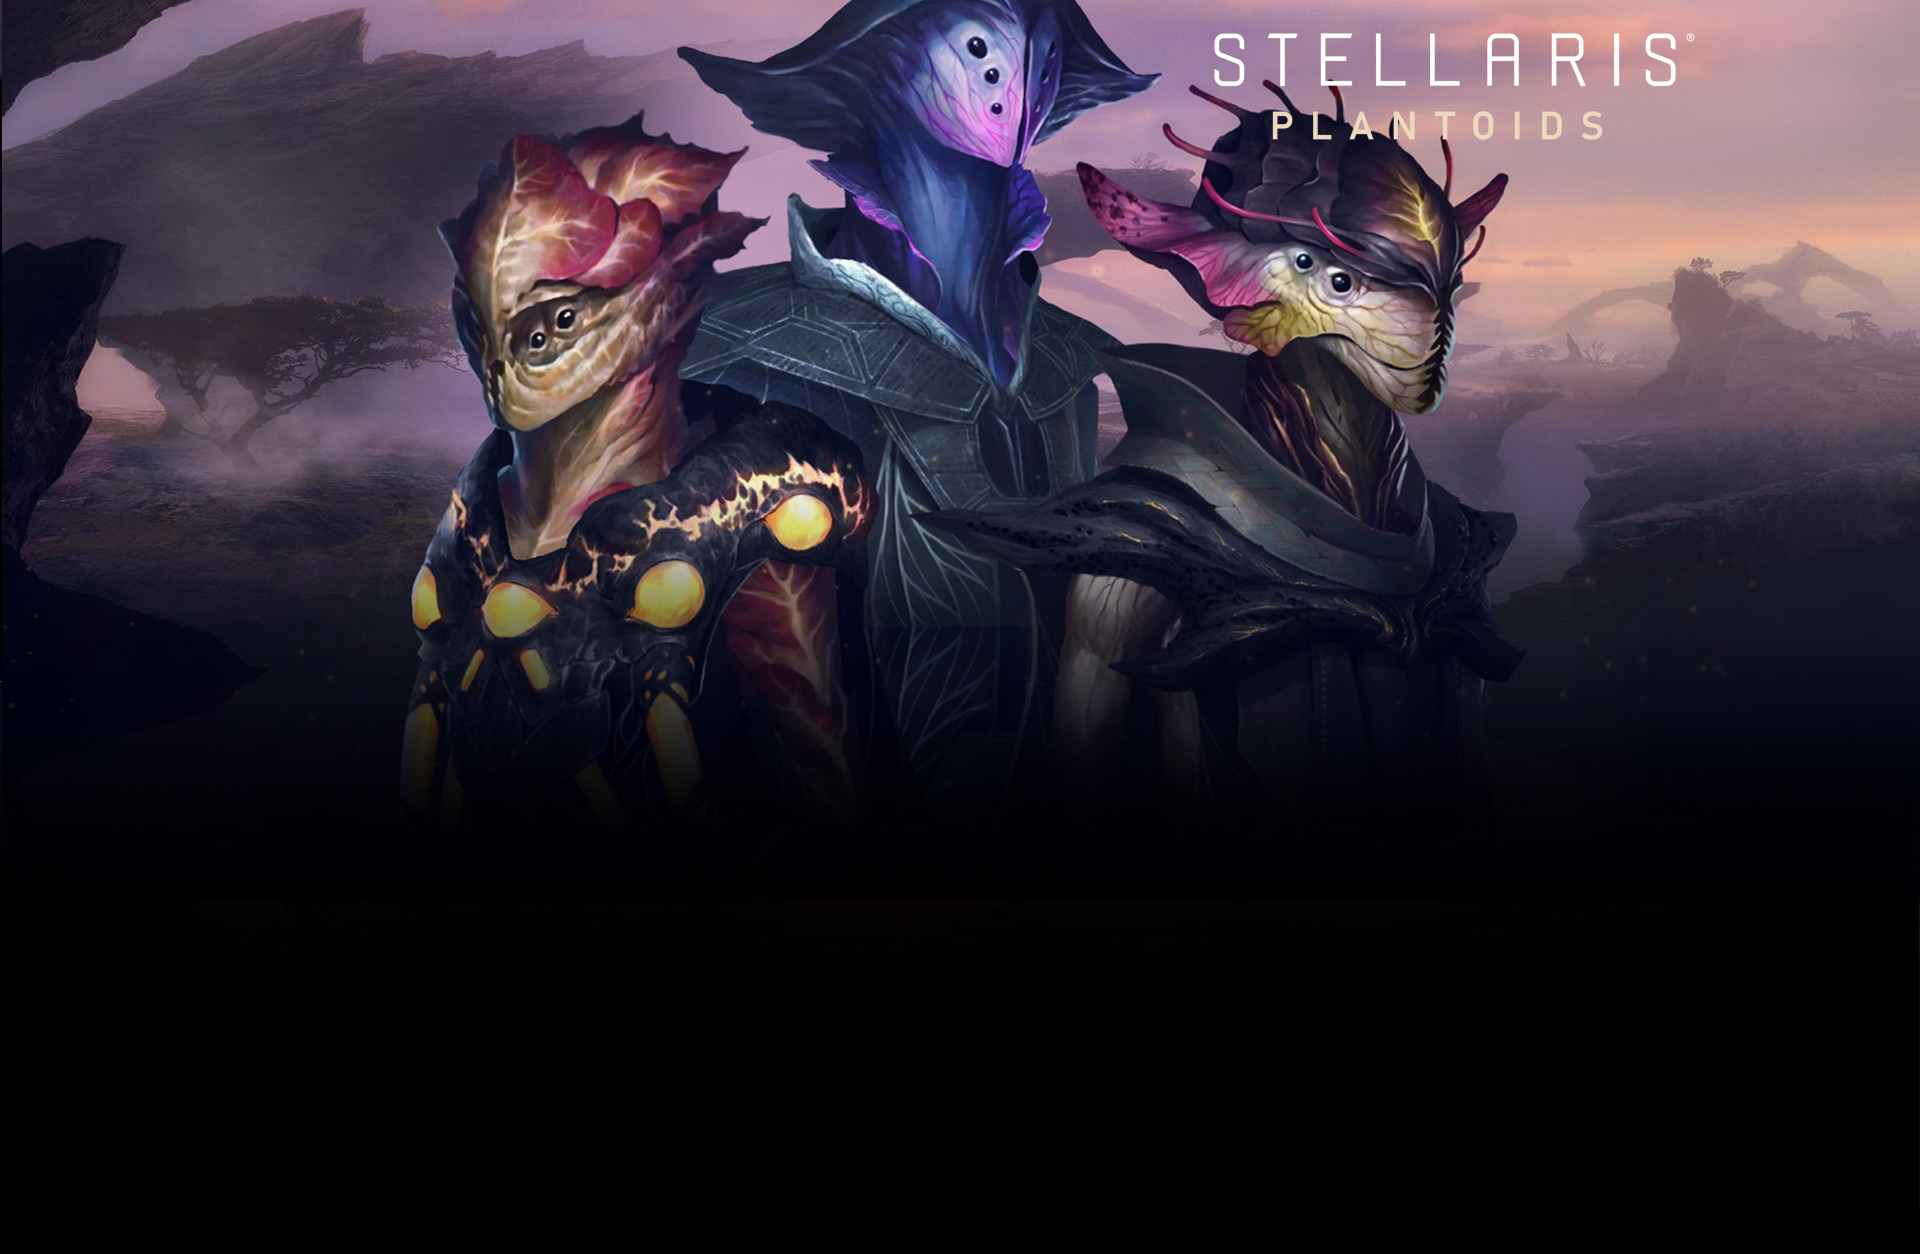 Stellaris - Plantoids Species Pack (DLC)